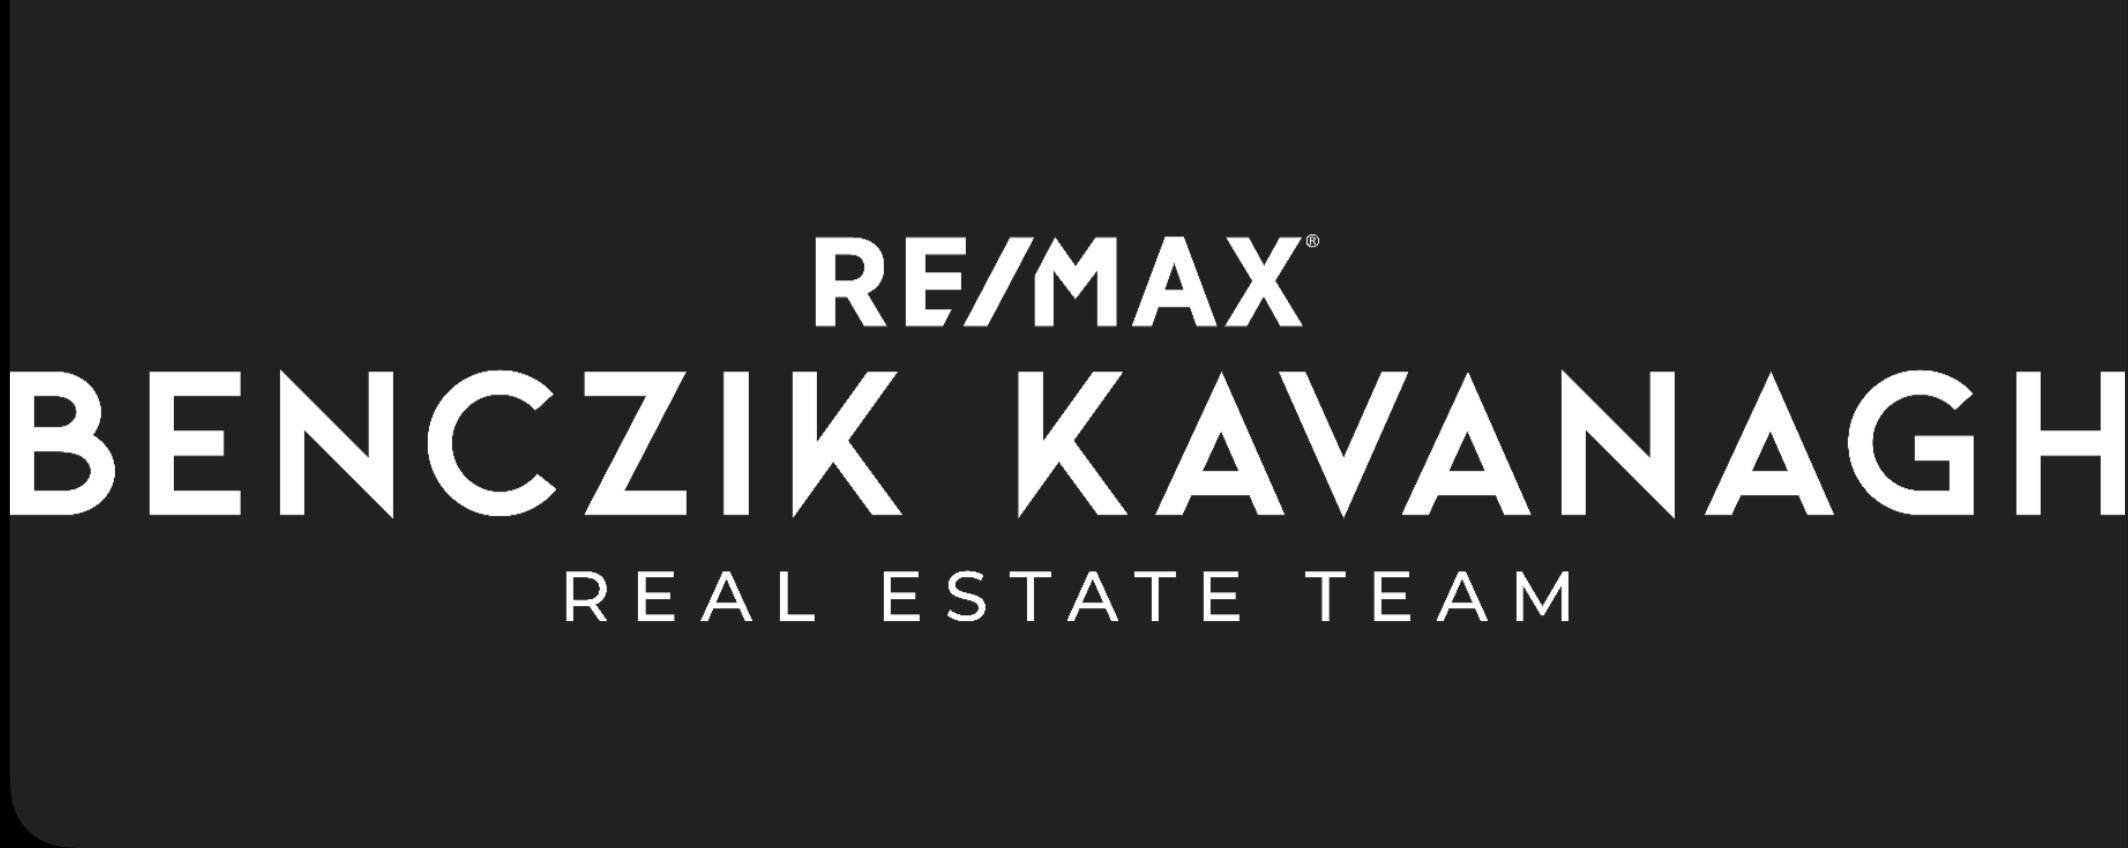 Benczik Kavanagh Real Estate Team